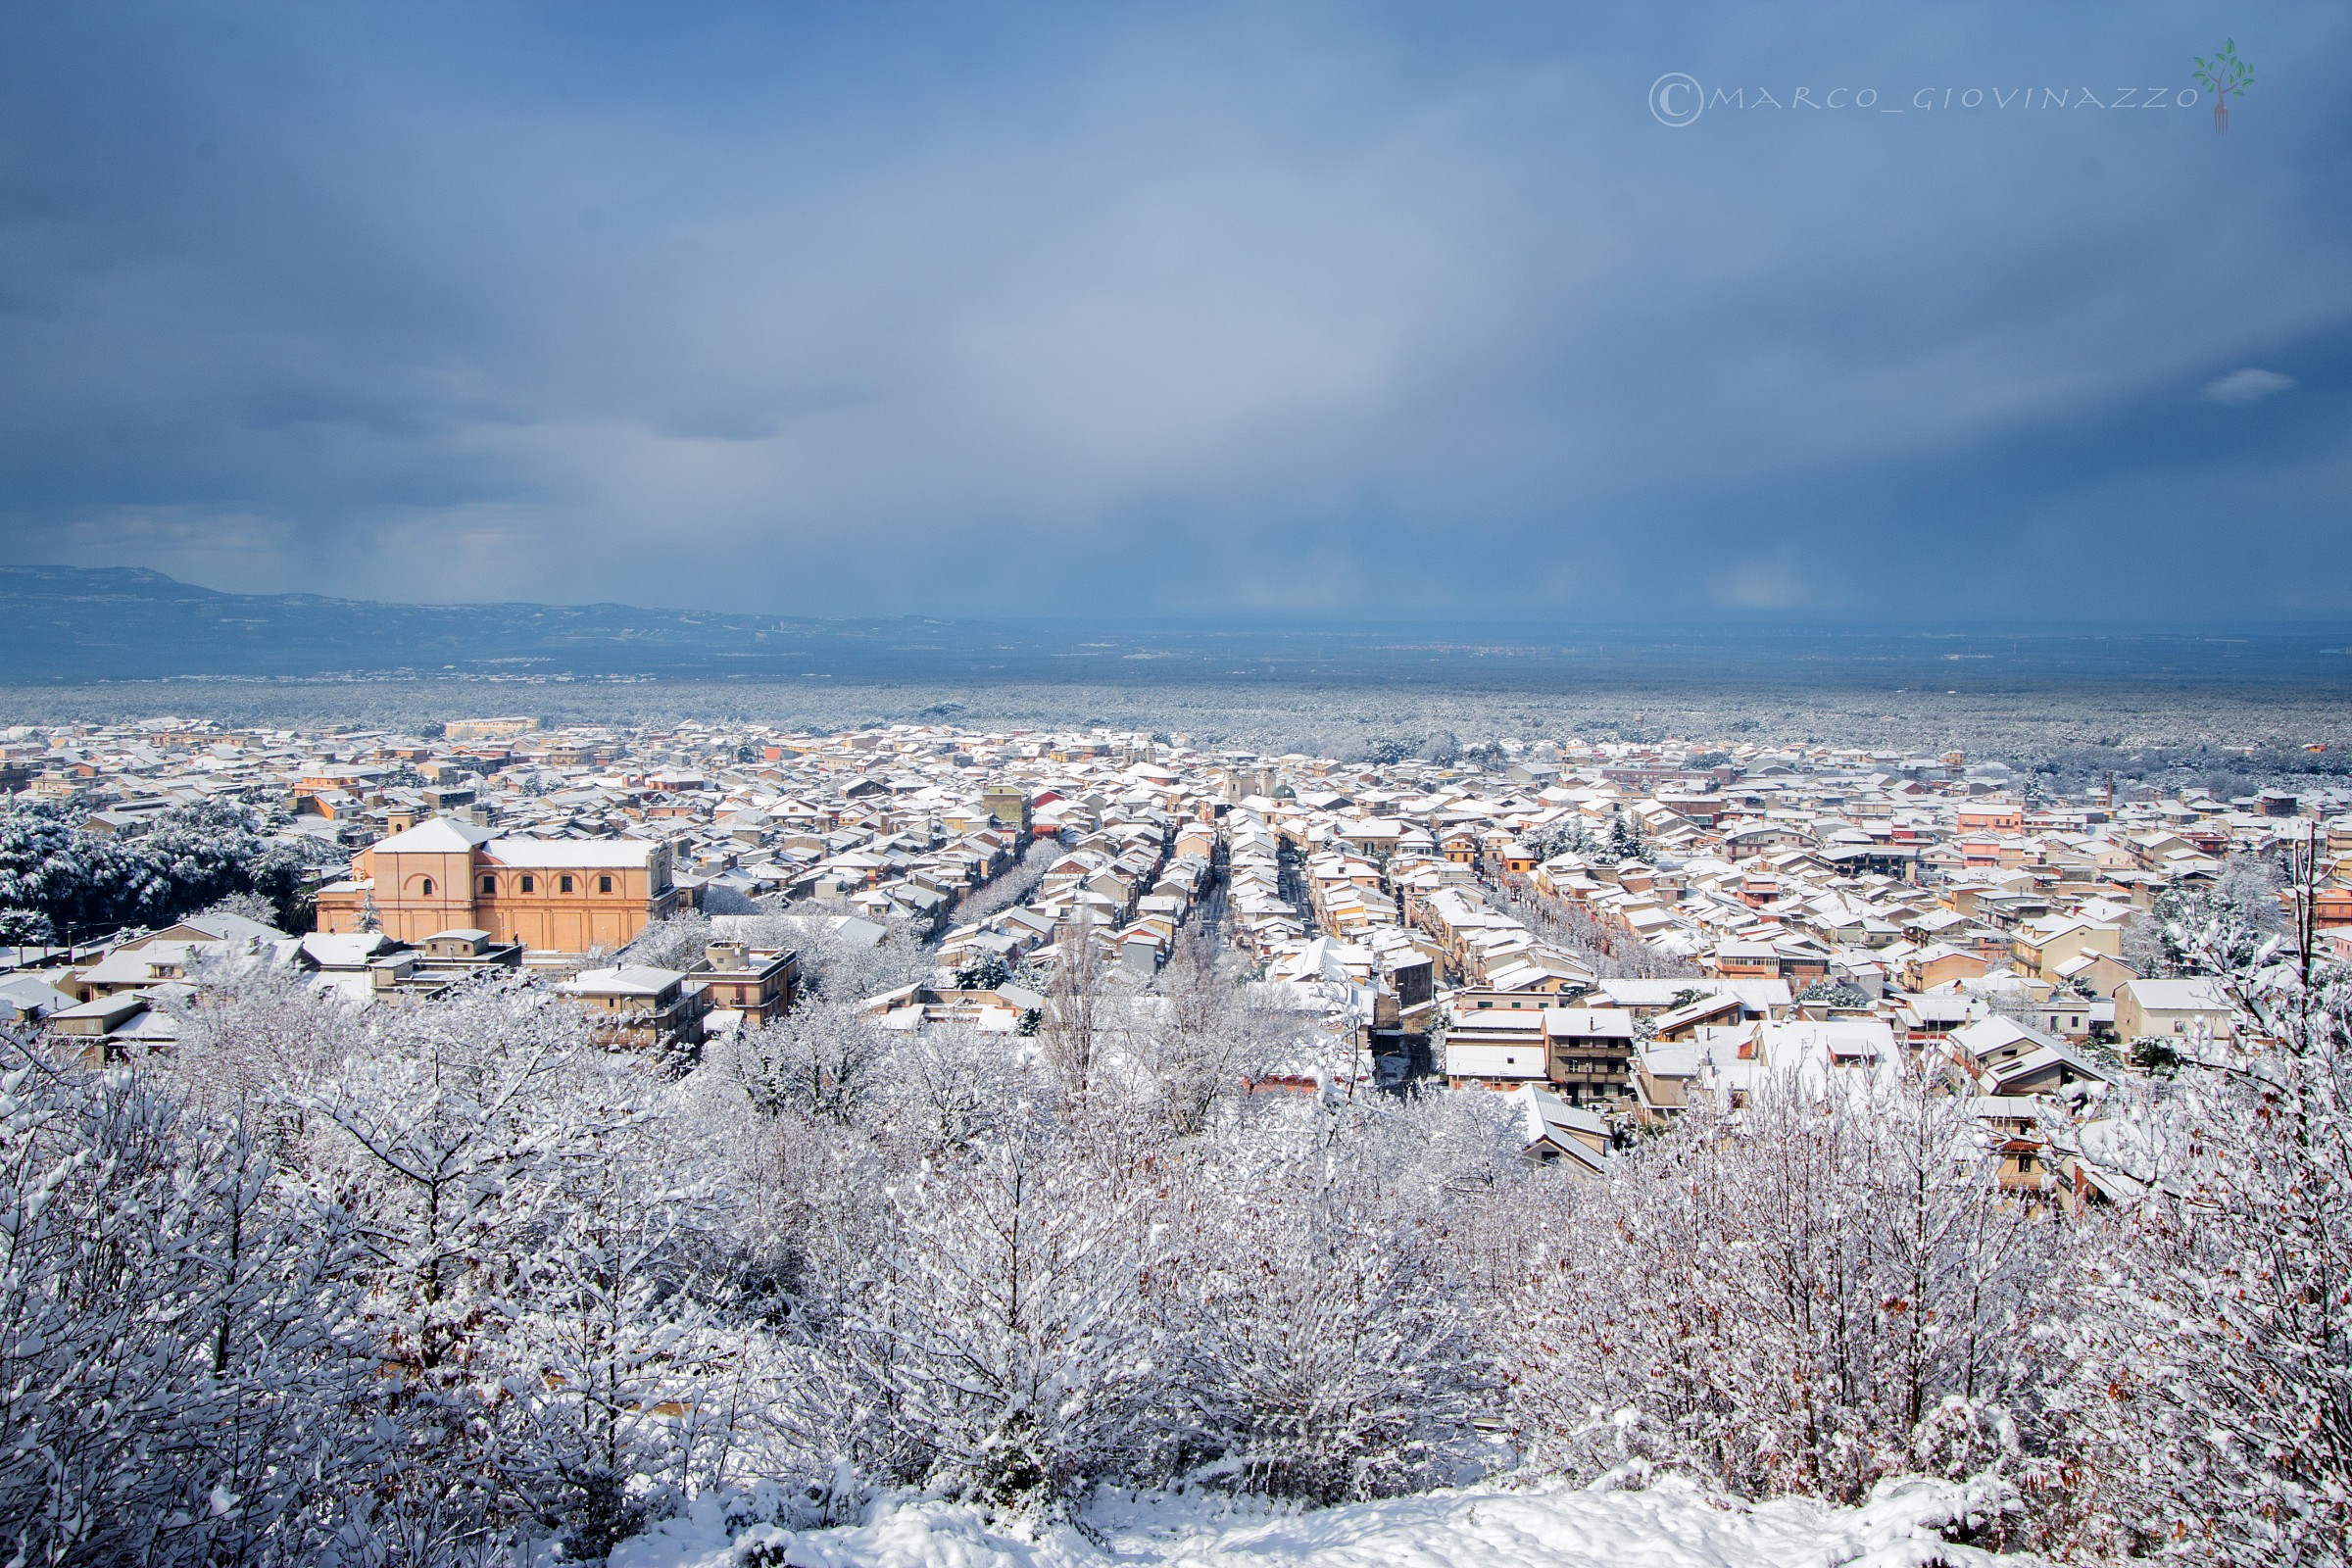 Novigrad under the snow...